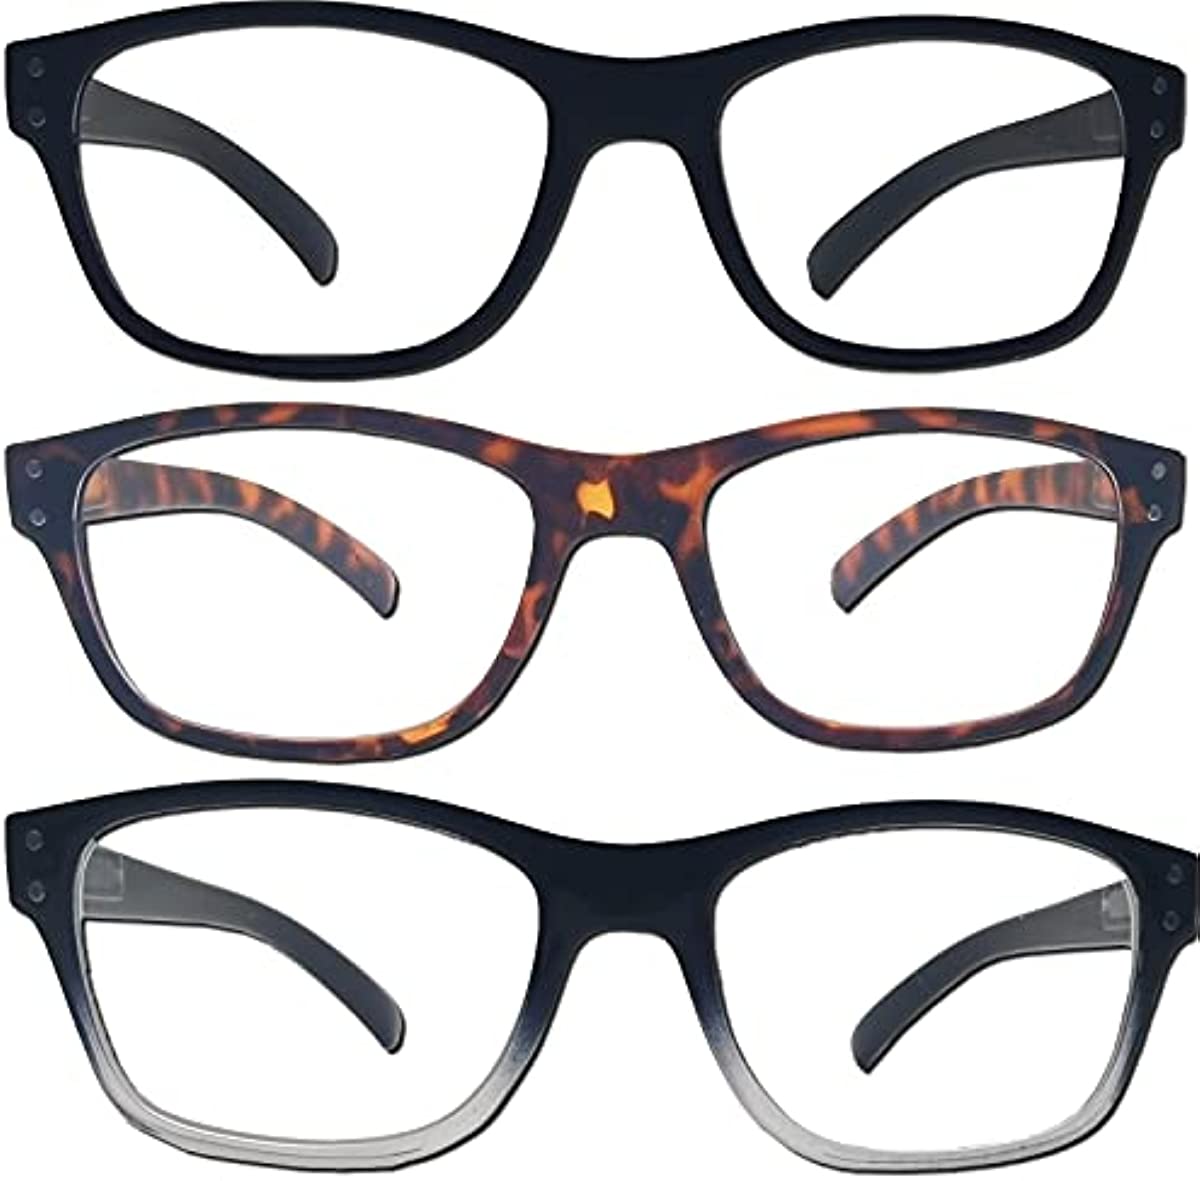 AirOne 3-Pack Reading Glasses Spring Hinge Readers for Women Men Anti Glare Filter Lightweight Eyeglasses (#3-Pack Mix Color）